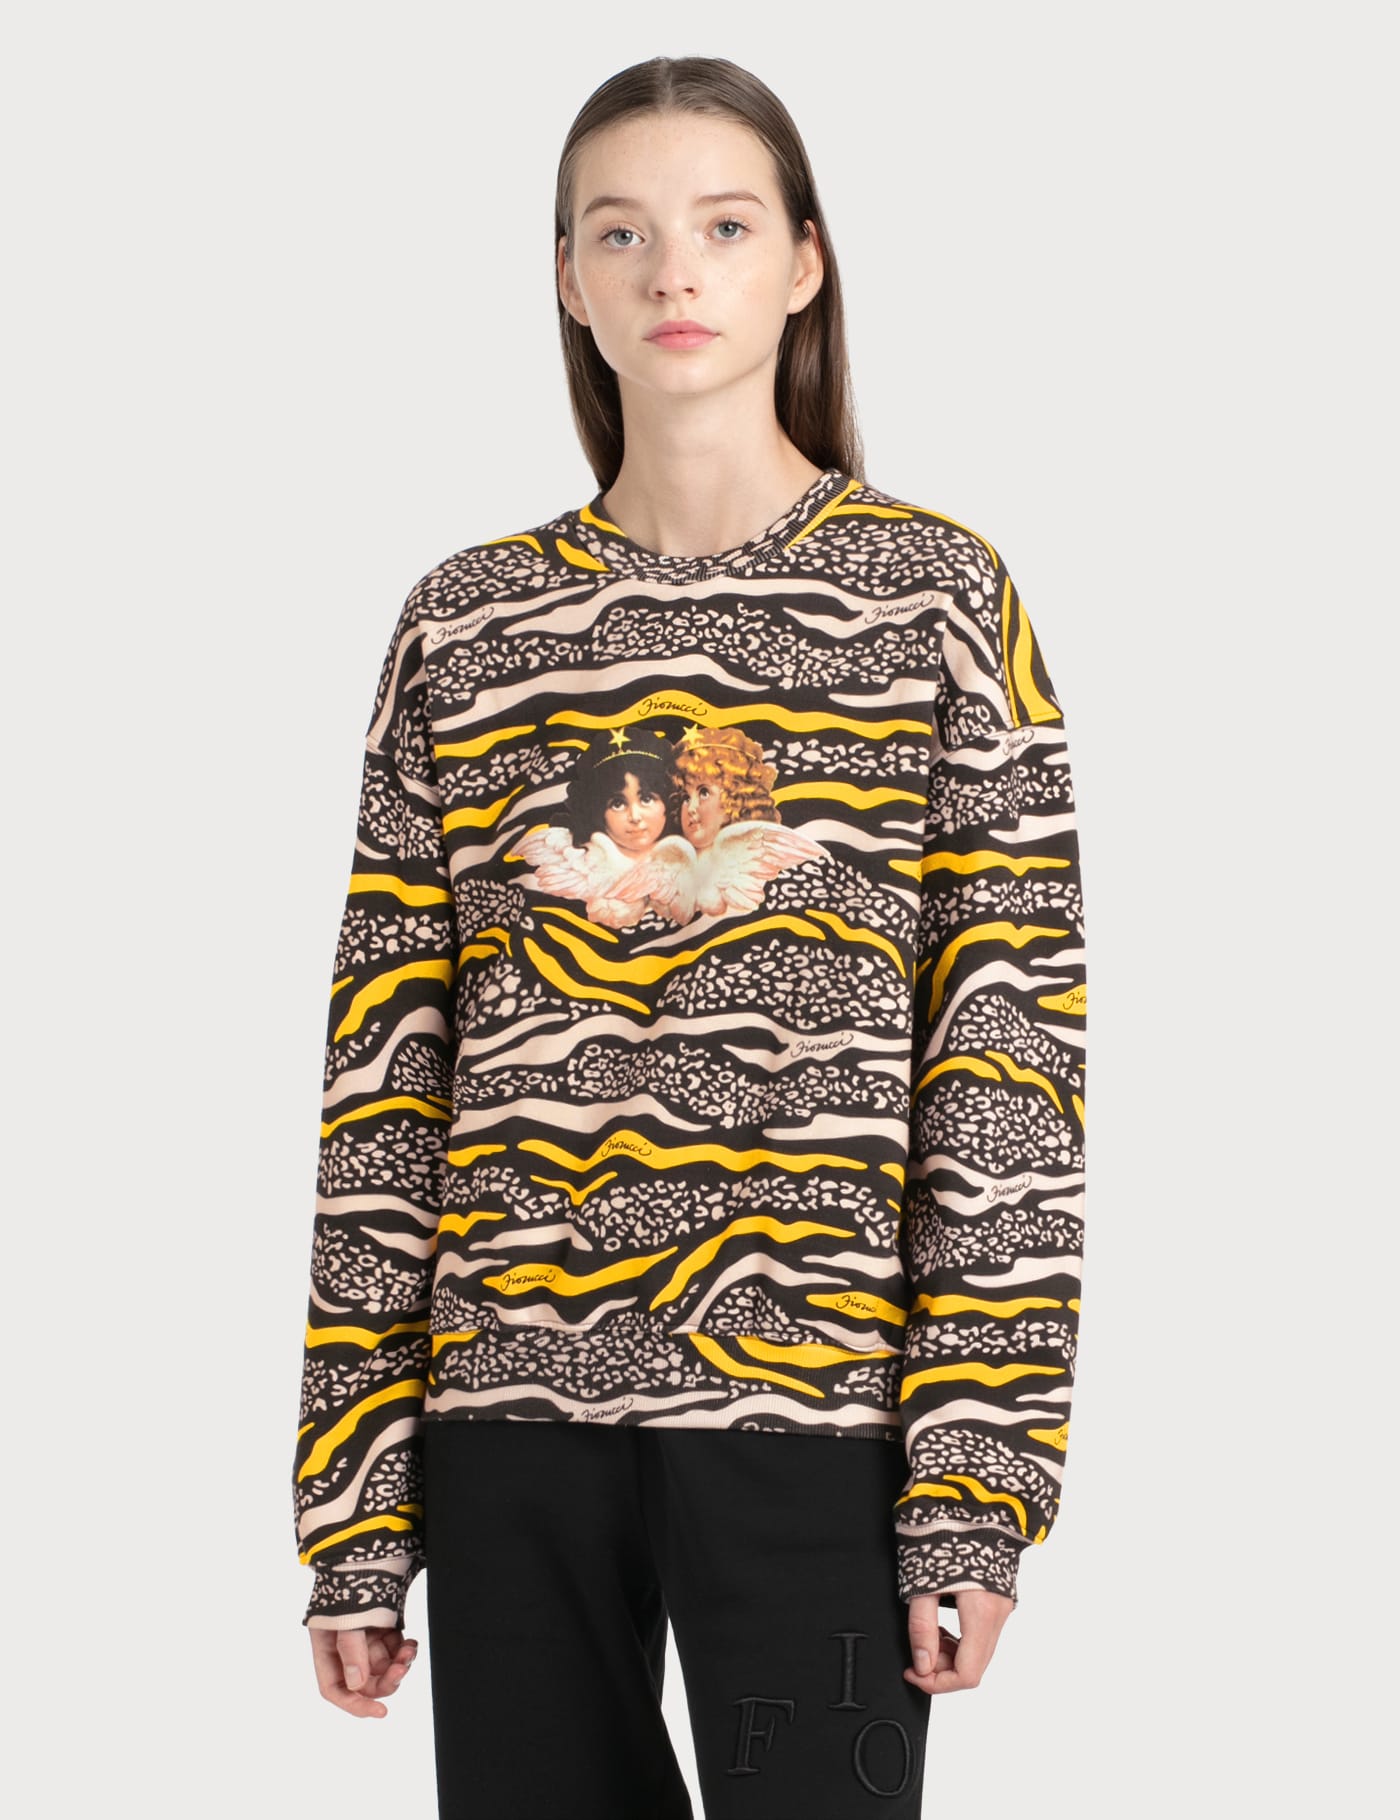 fiorucci yellow sweatshirt